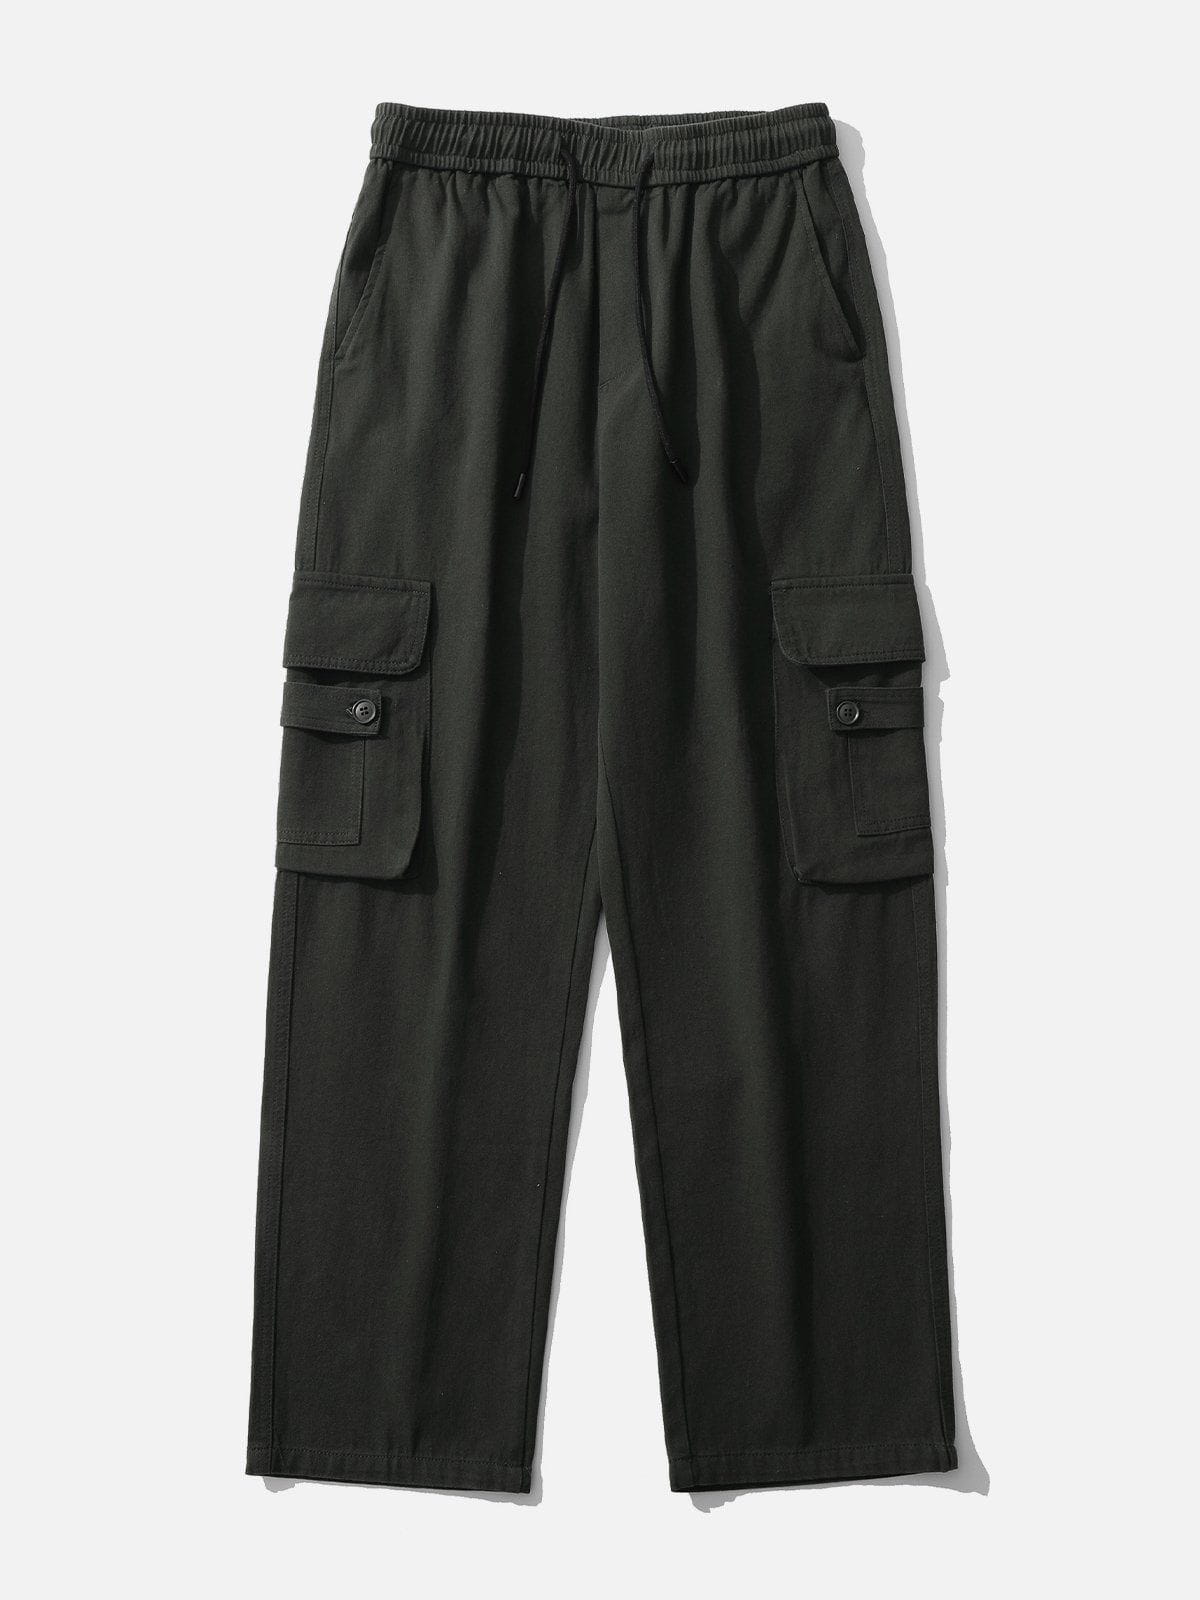 Eprezzy® - Large Multi-Pocket Drawstring Cargo Pants Streetwear Fashion - eprezzy.com